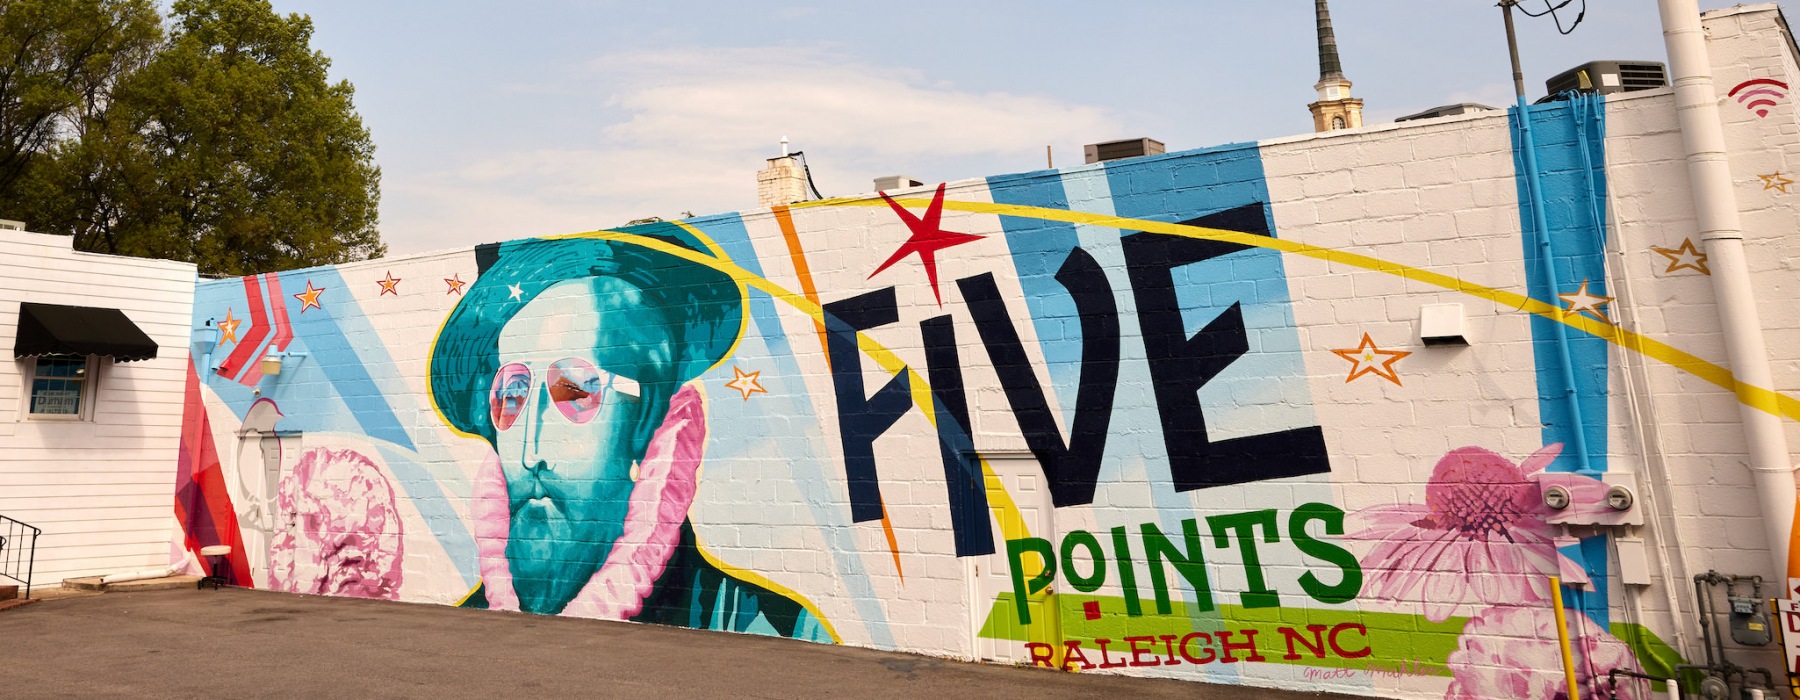 Mural of five points neighborhood